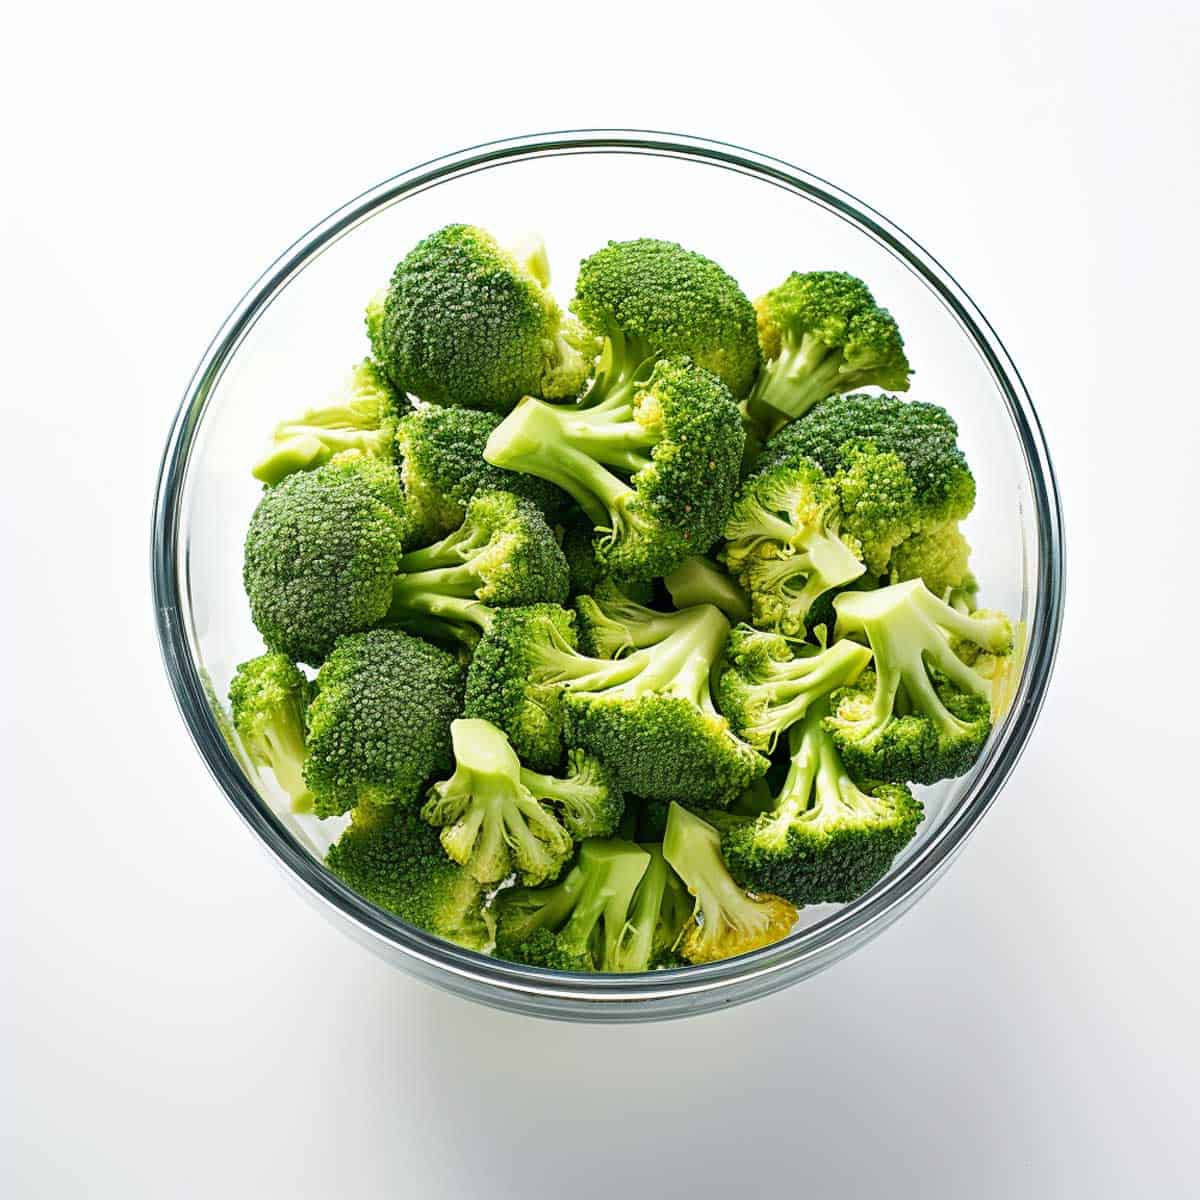 Broccoli florets in a bowl.